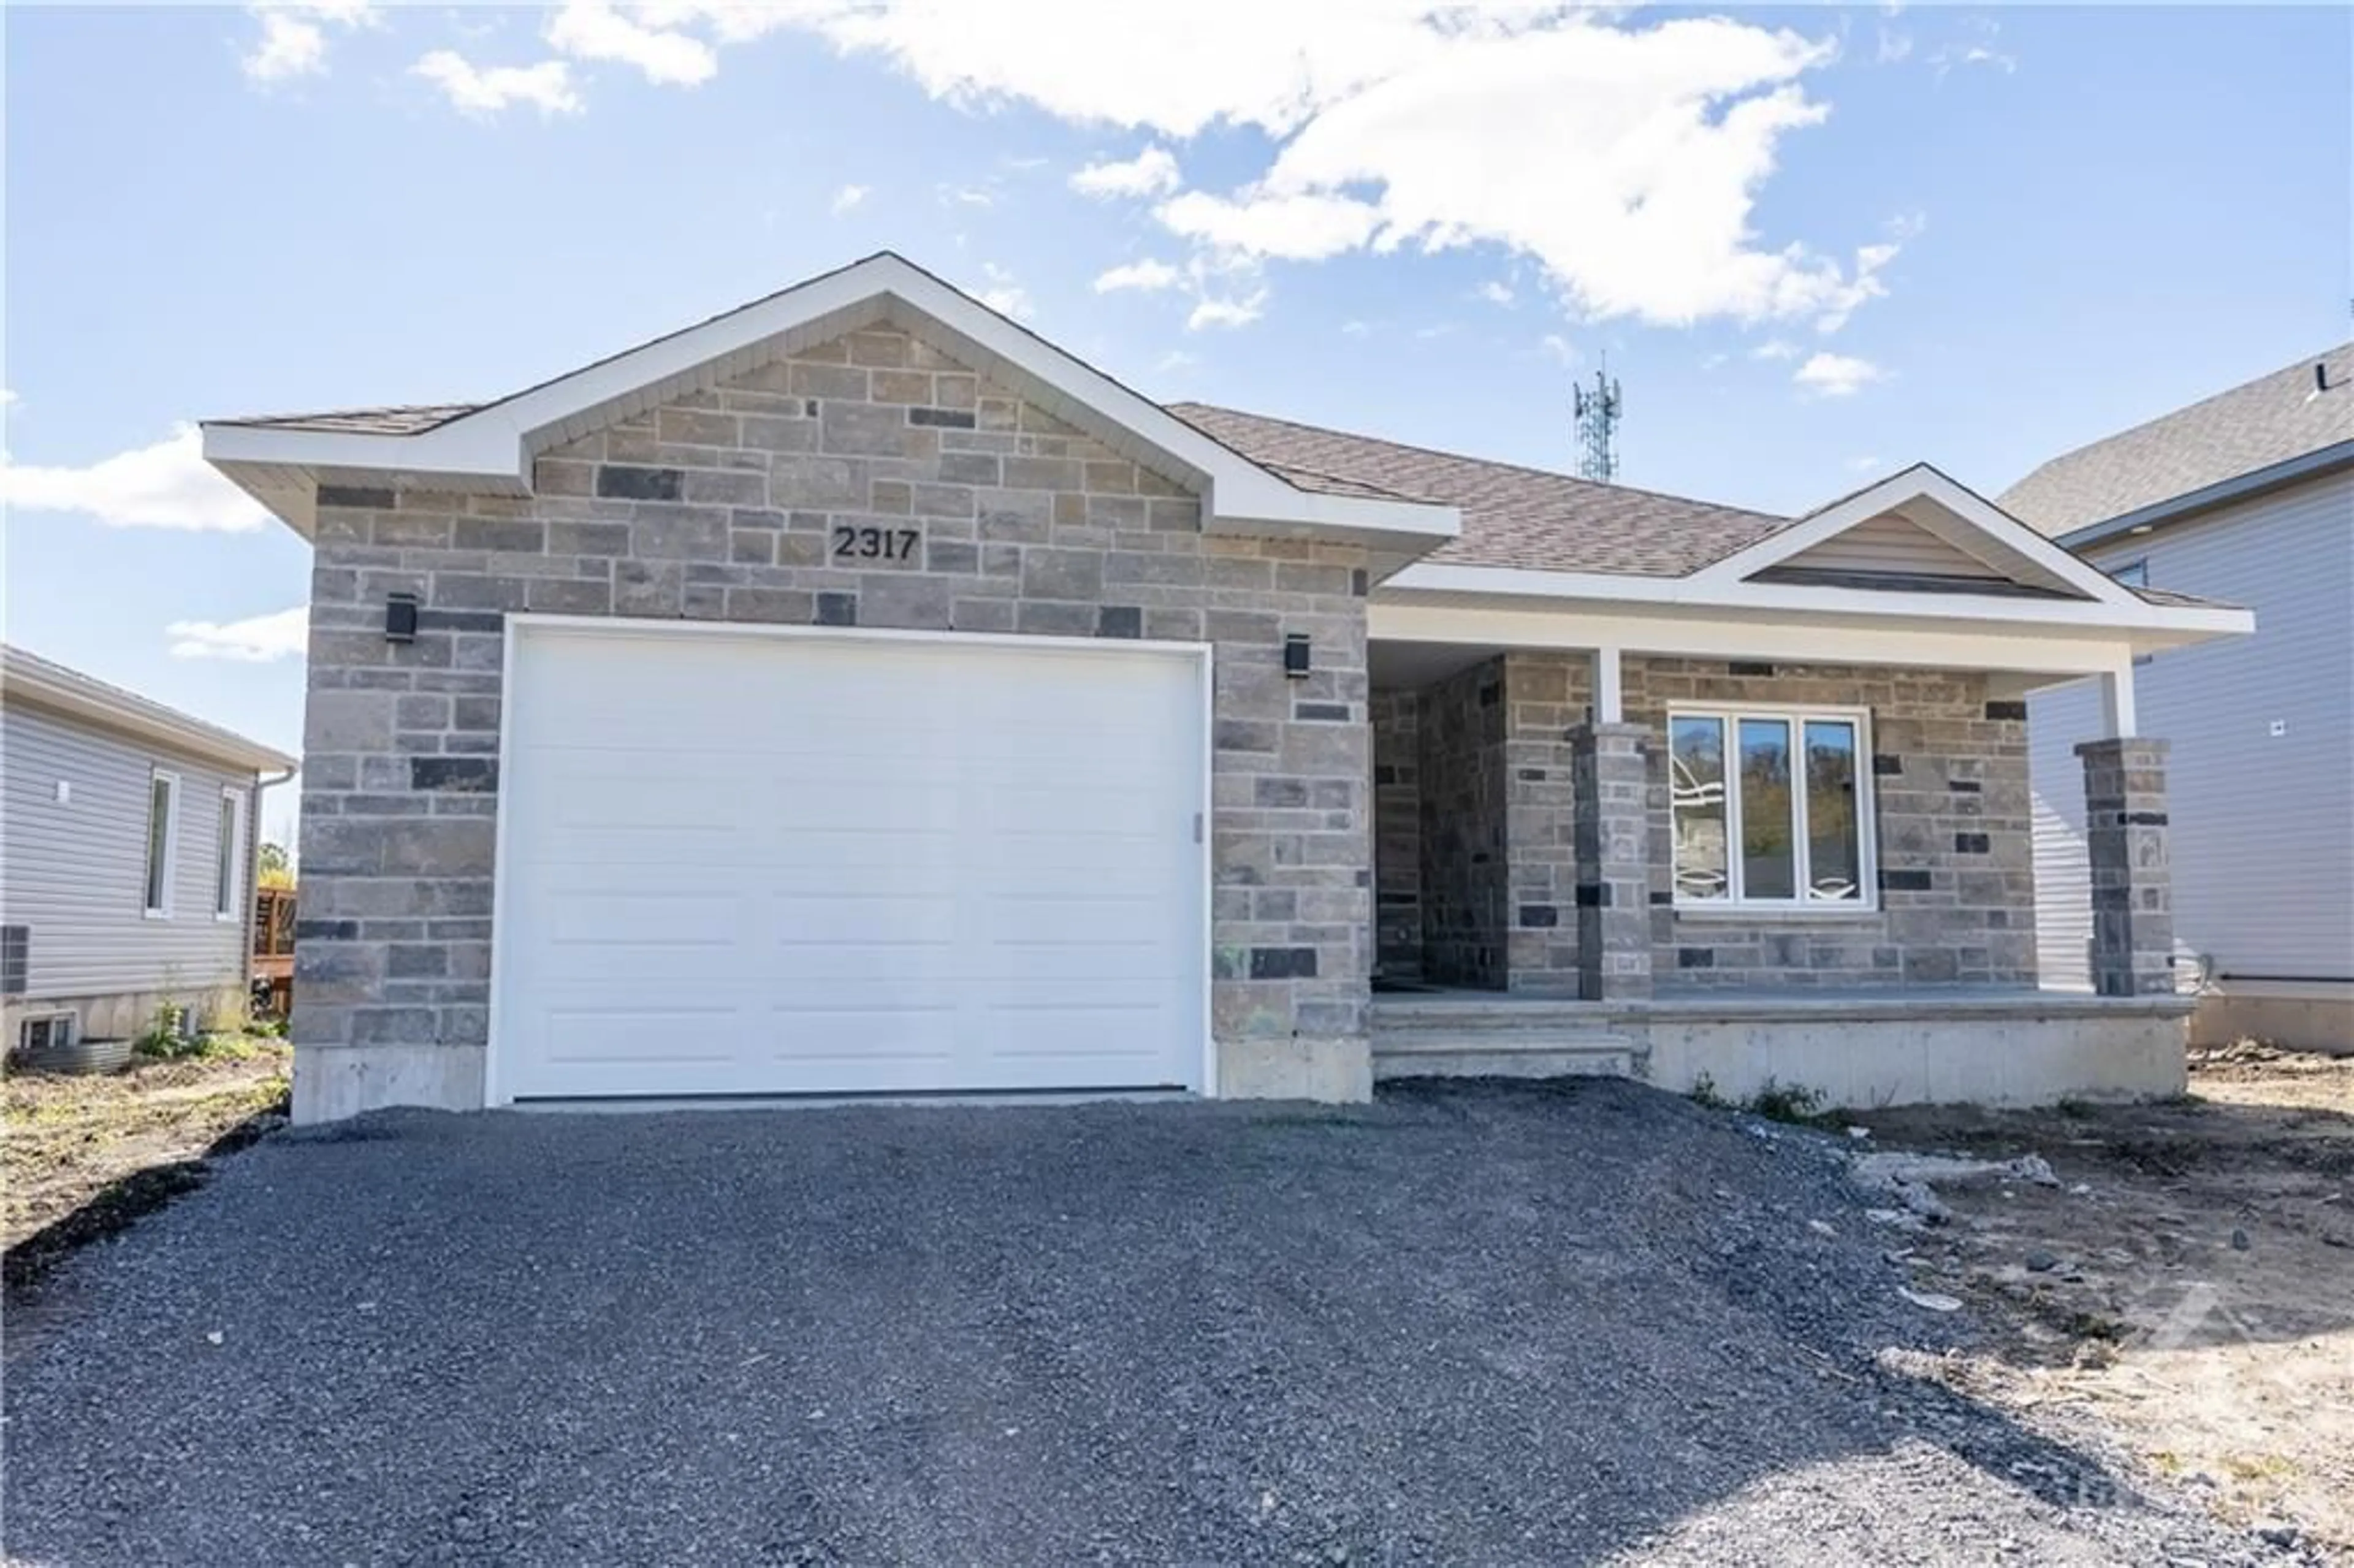 Home with brick exterior material for 1405 CAROLINE Crt, Cornwall Ontario K6J 0C5